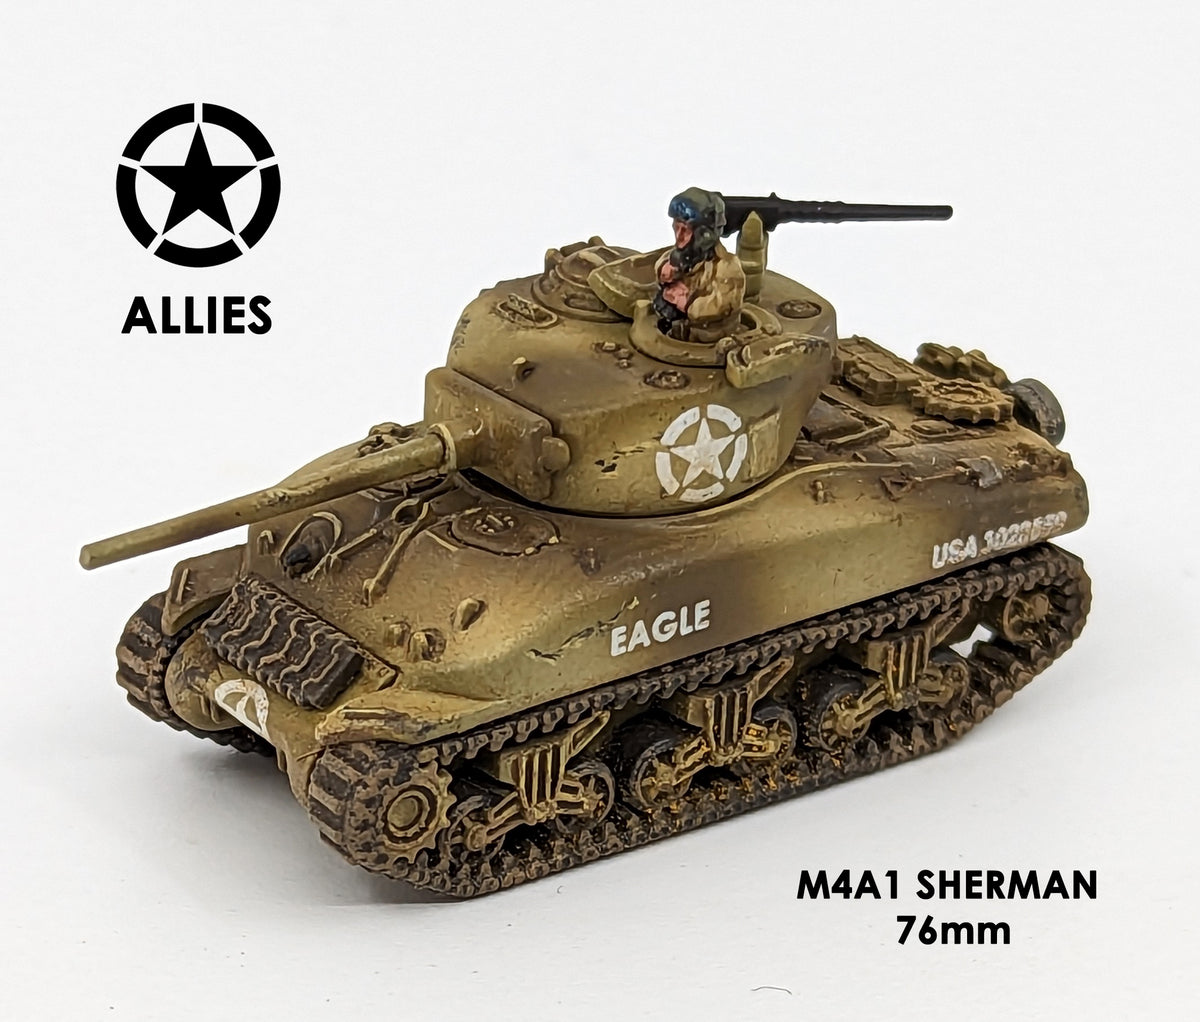 M4A1 Шерманы